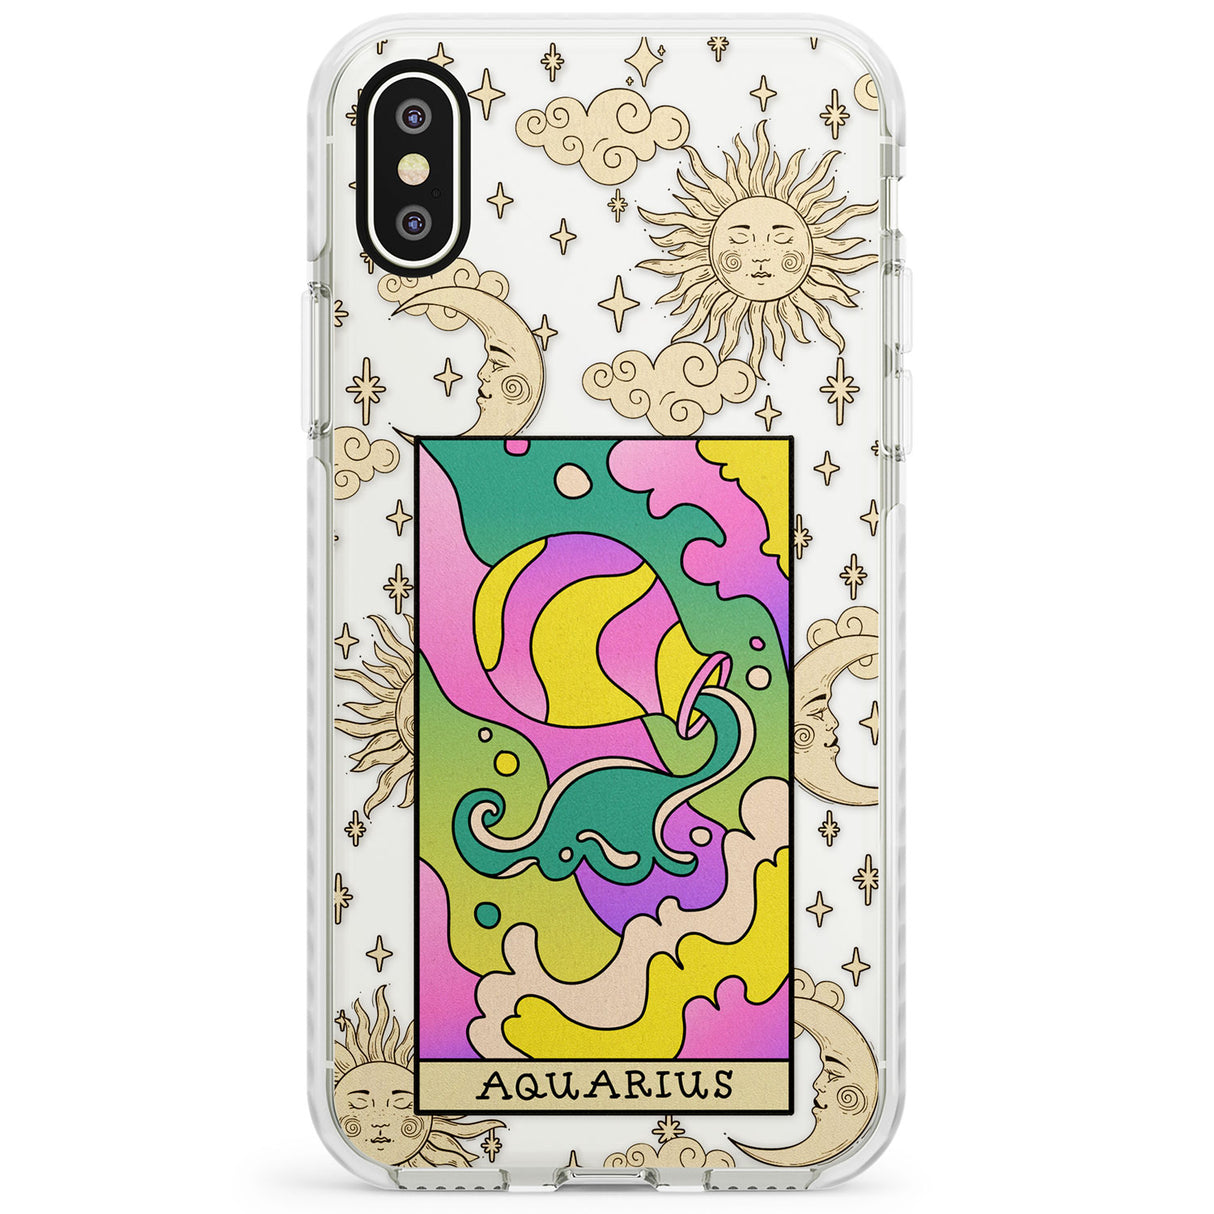 Celestial Zodiac - Aquarius Impact Phone Case for iPhone X XS Max XR